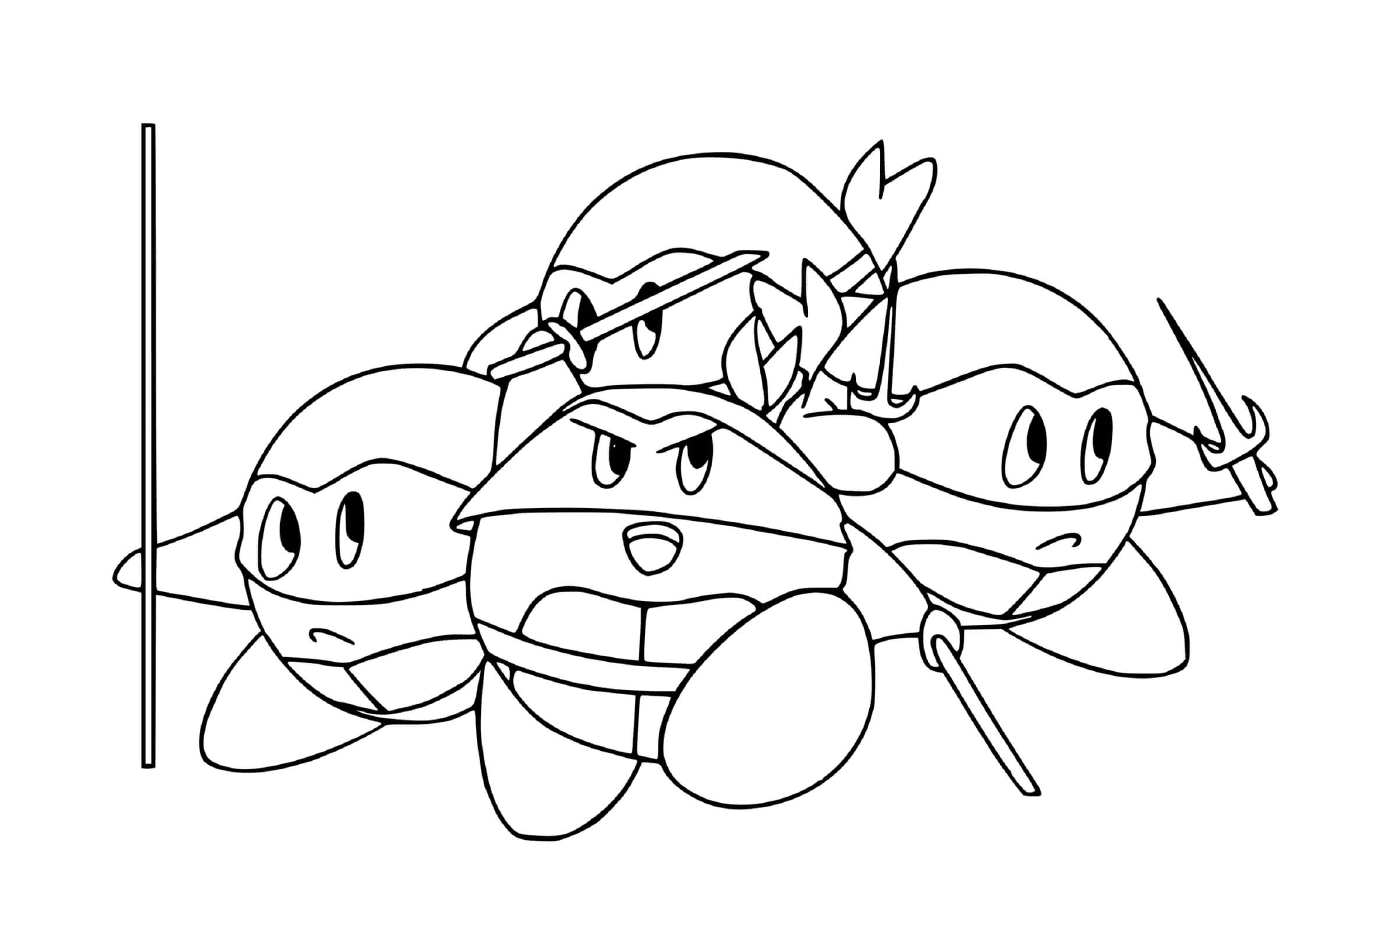  Kirby e le tartarughe ninja 